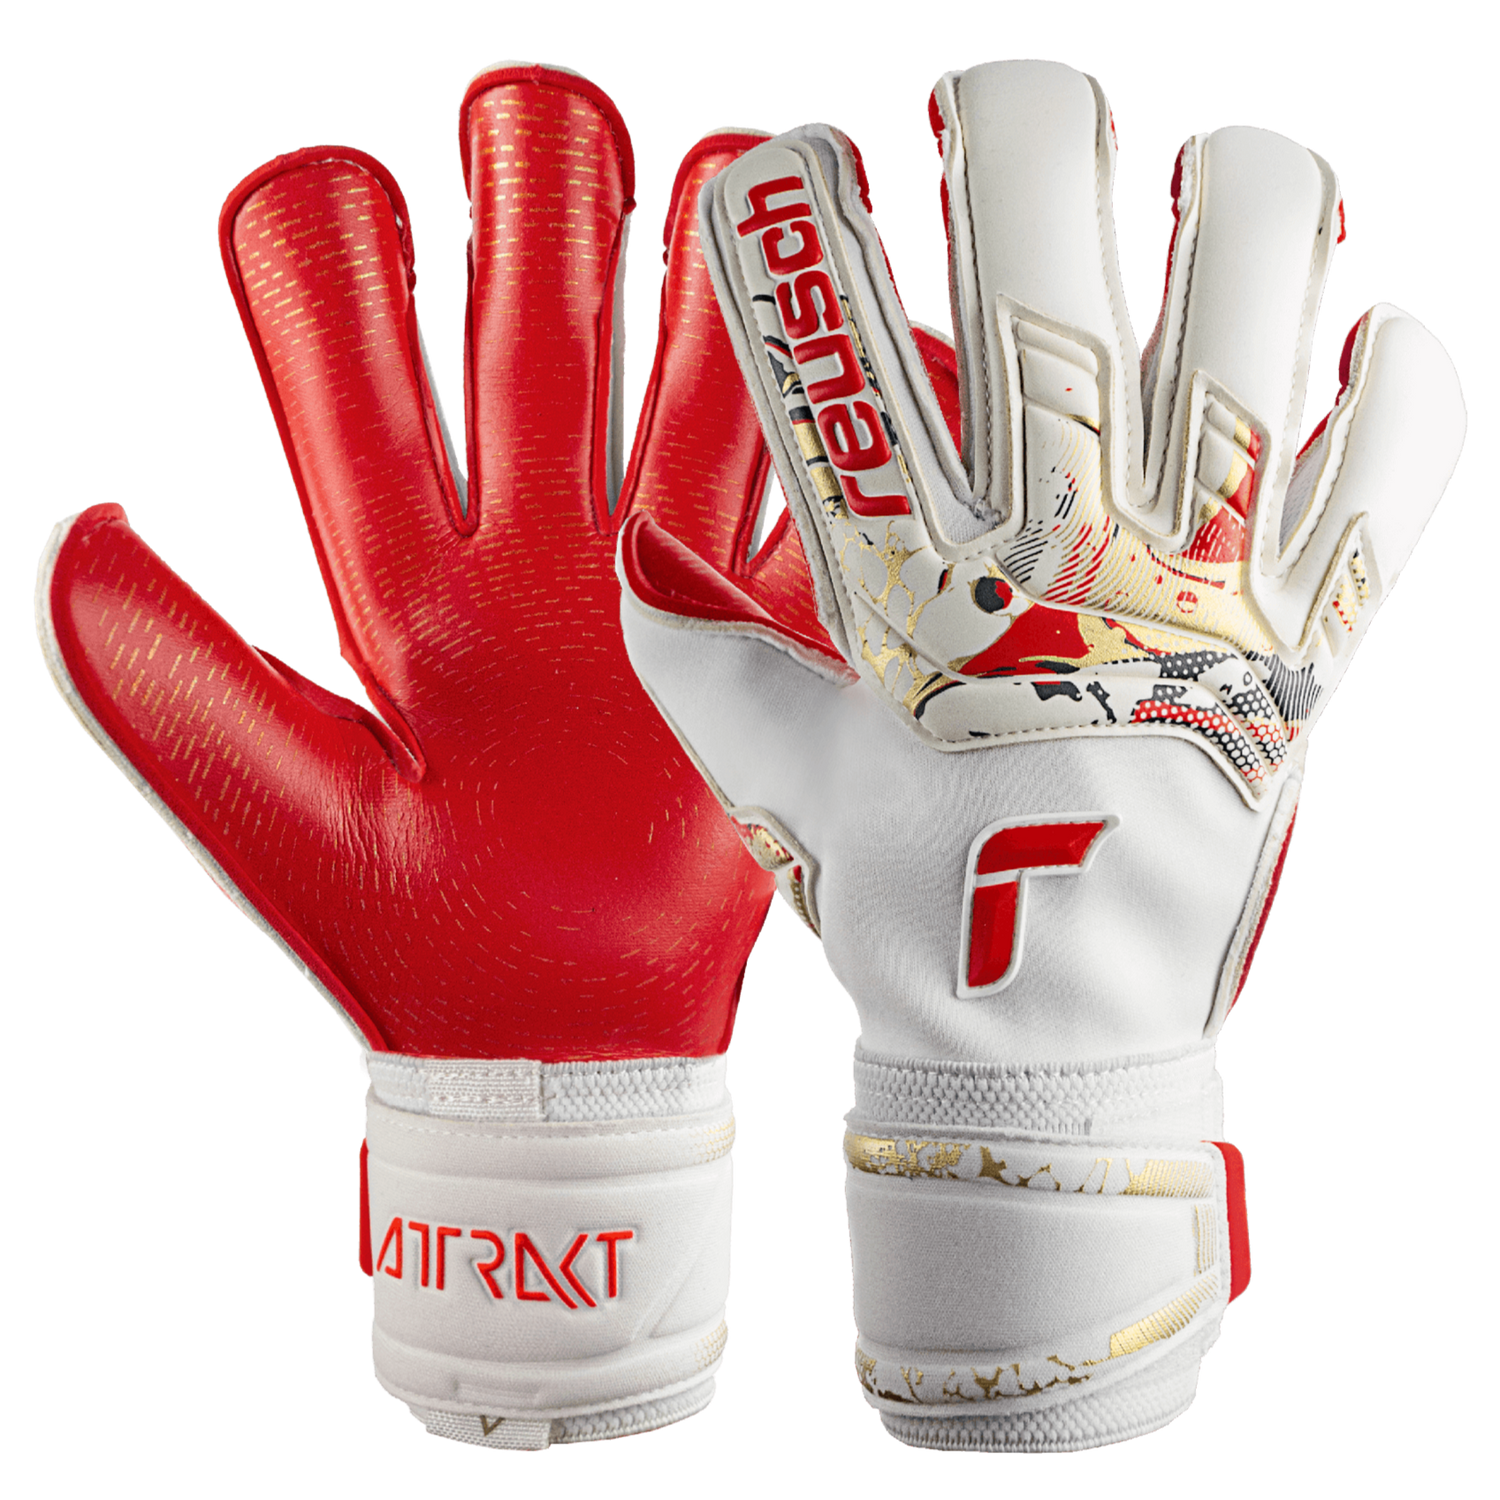 Reusch Attrakt Gold X Glueprint Ortho-Tec FS Goalkeeper Gloves - White-Gold-Red (Pair)